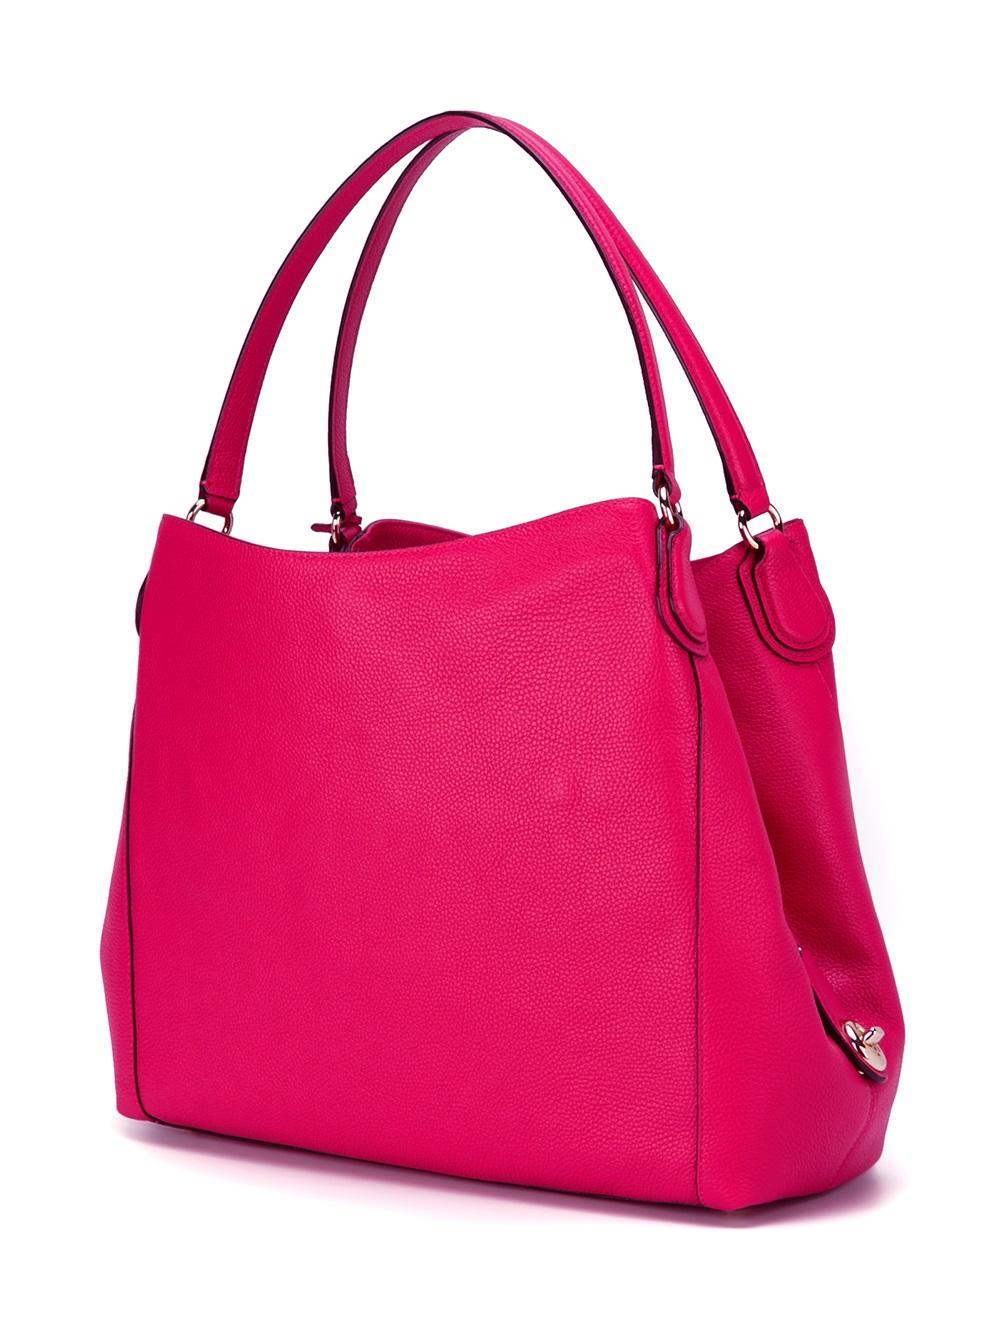 COACH Edie Leather Shoulder Bag in Pink/Purple (Pink) - Lyst